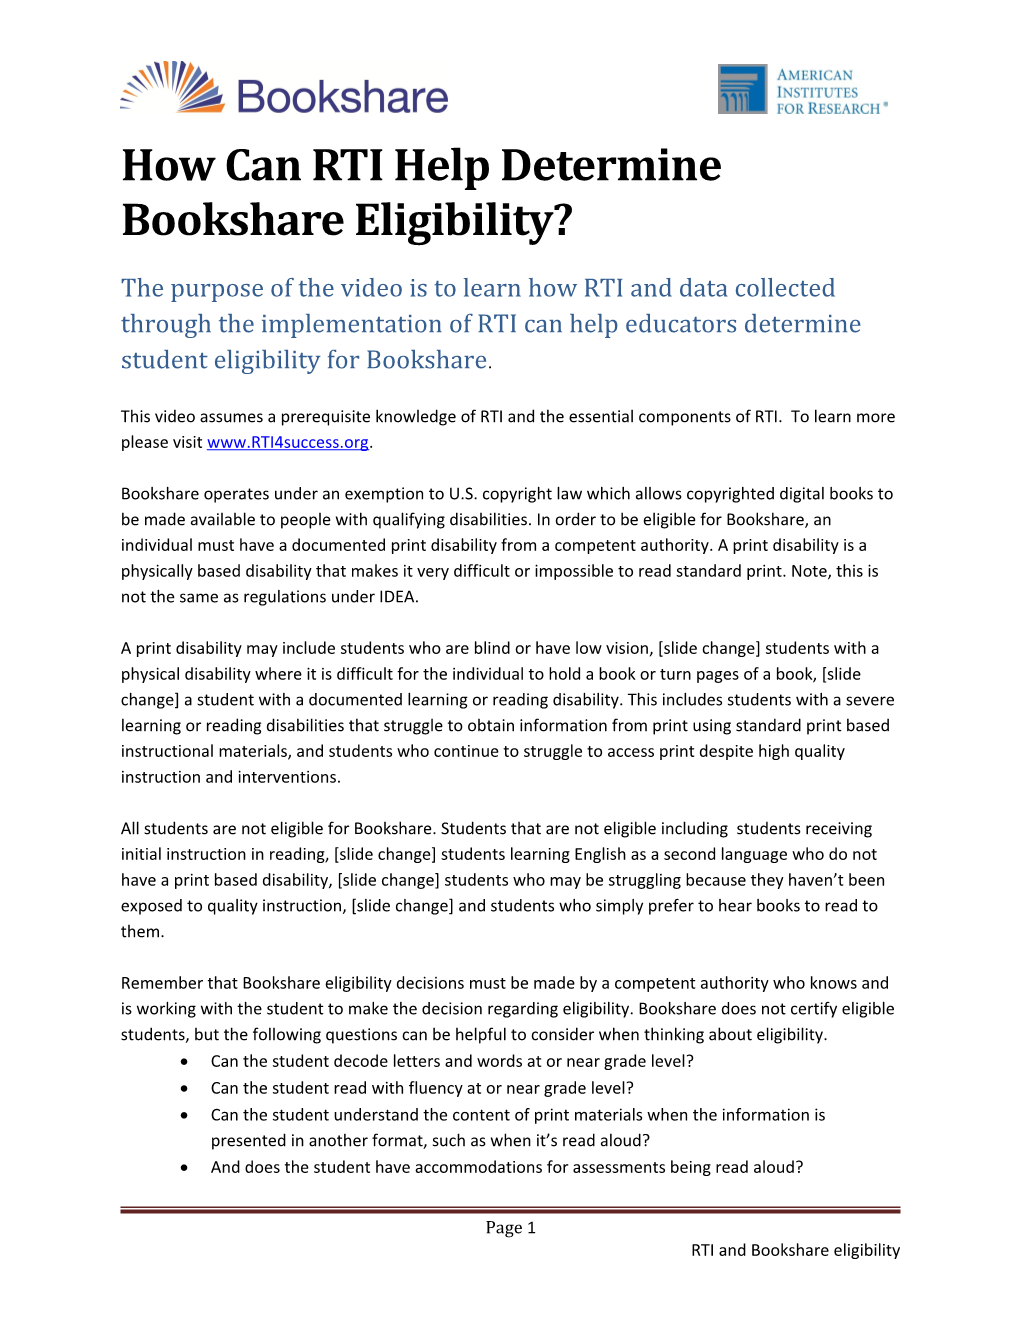 How Can RTI Help Determine Bookshare Eligibility?